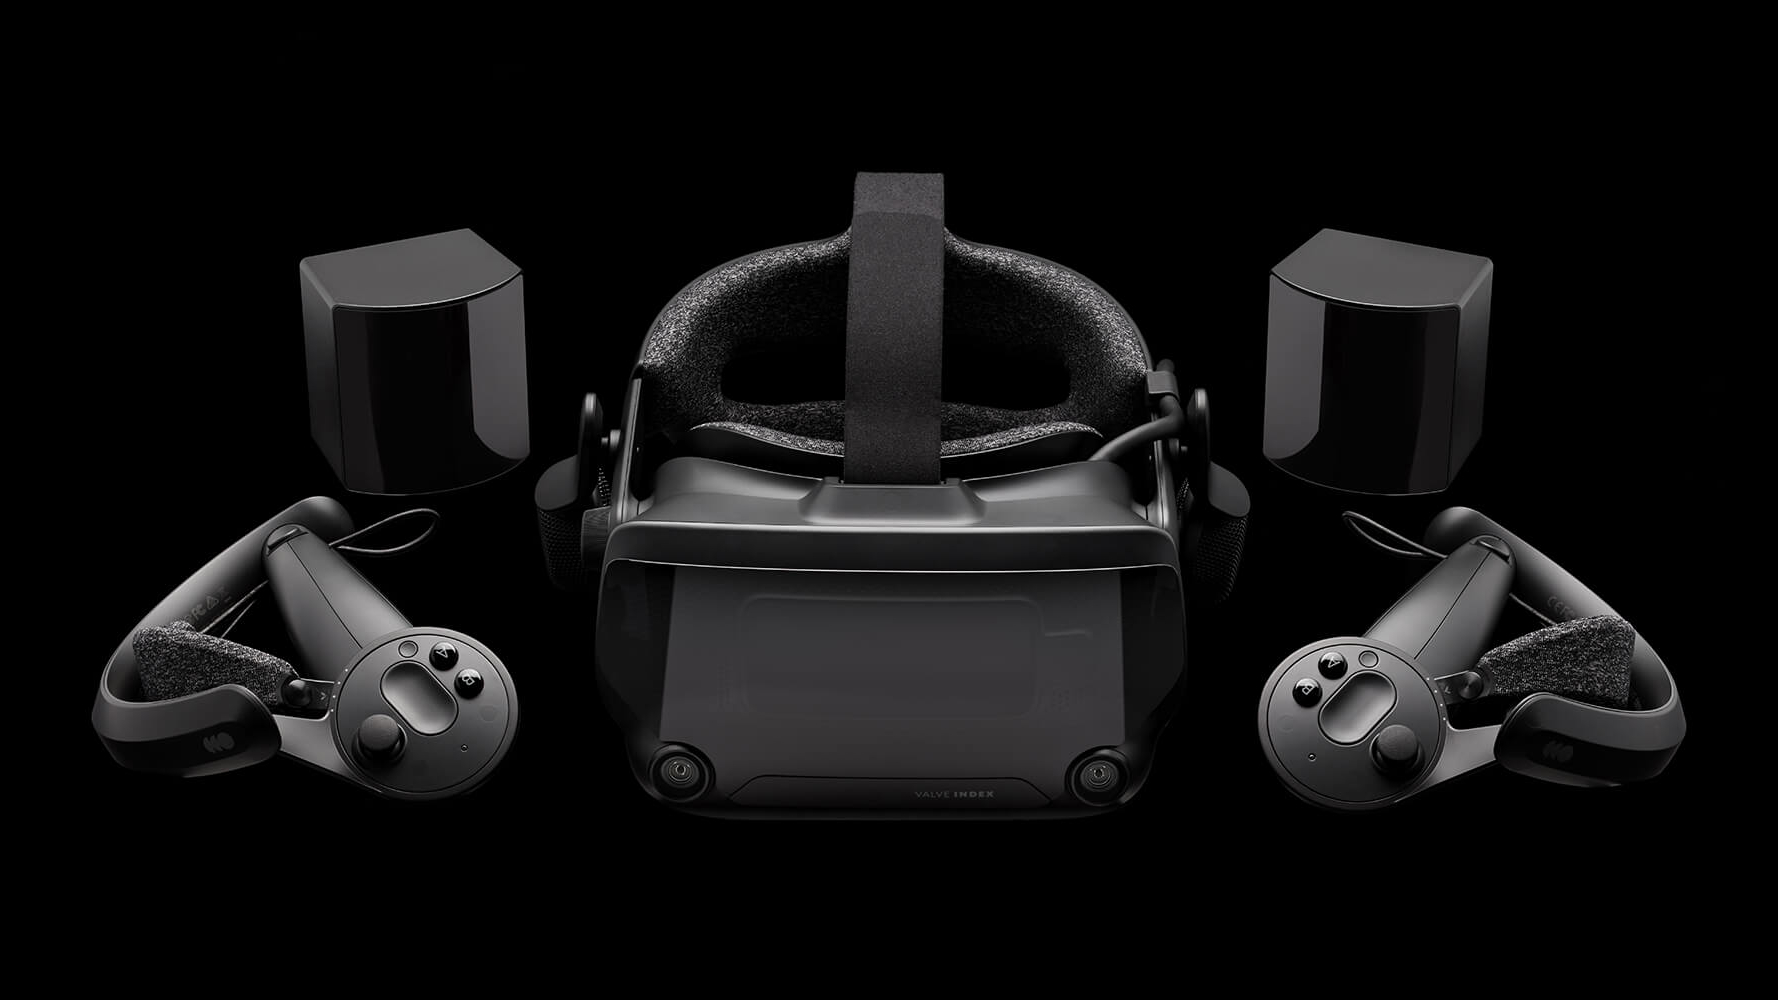 The VR Valve Index headset